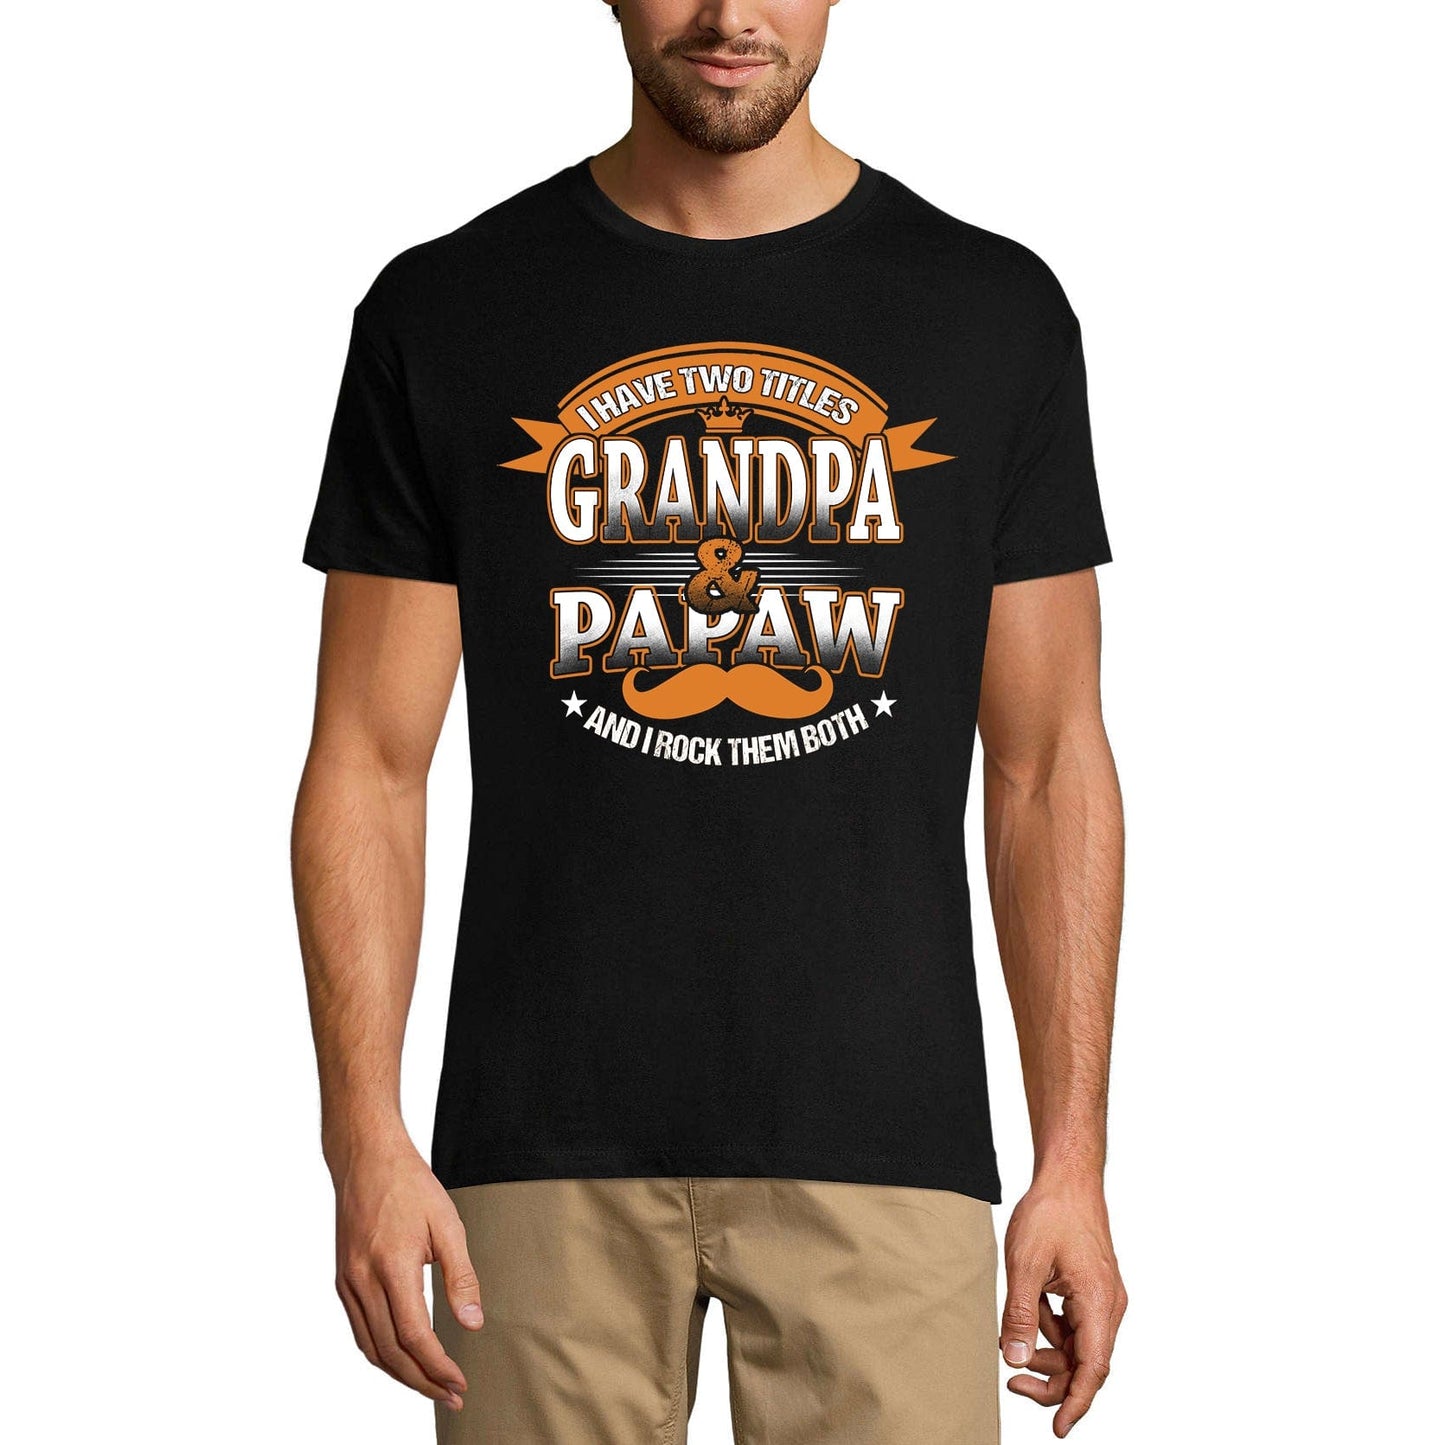 ULTRABASIC Men's Novelty T-Shirt I Have 2 Titles Grandpa and Papaw Tee Shirt